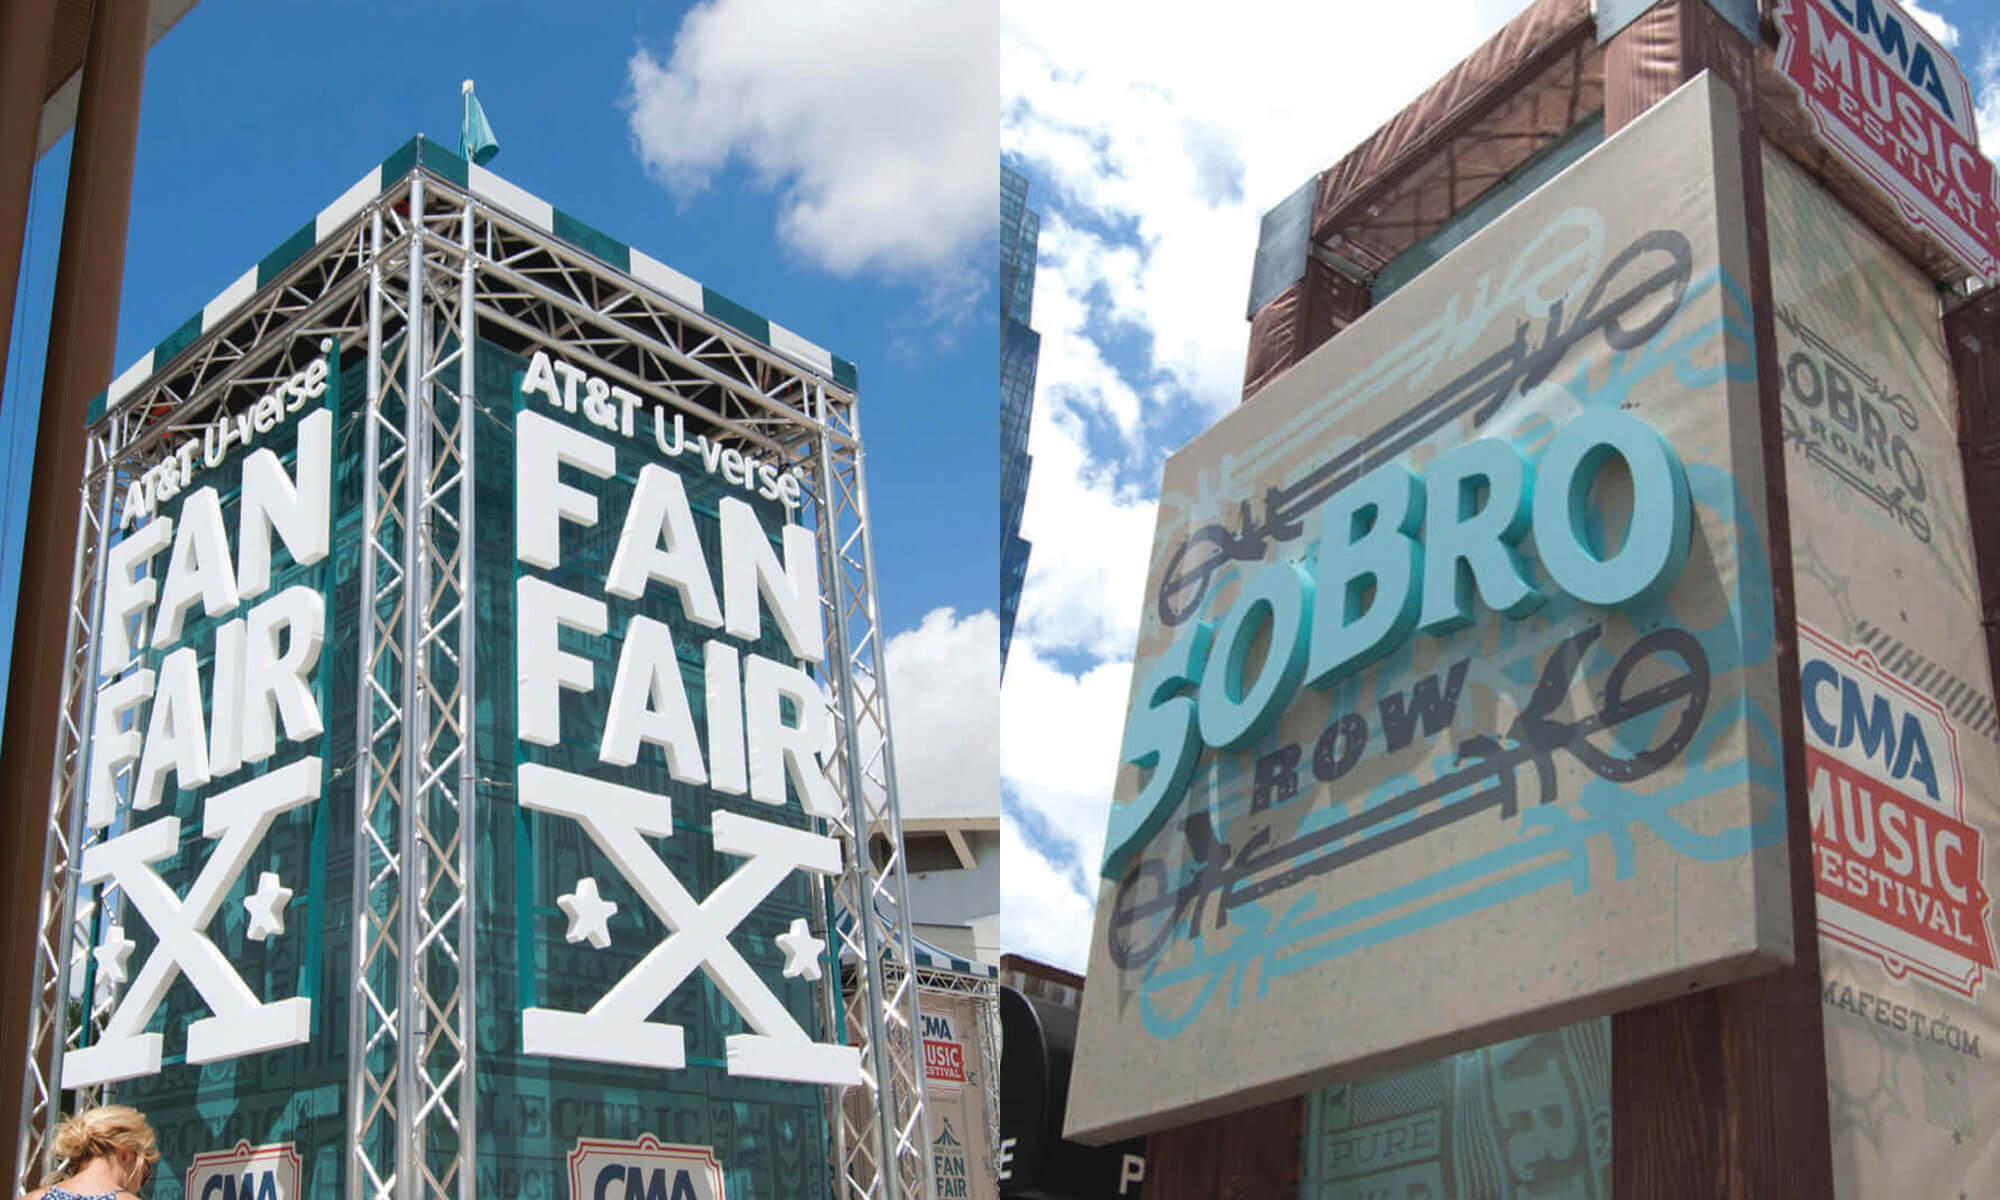 Fan Fair X and SoBro Row event signage at CMA Fest